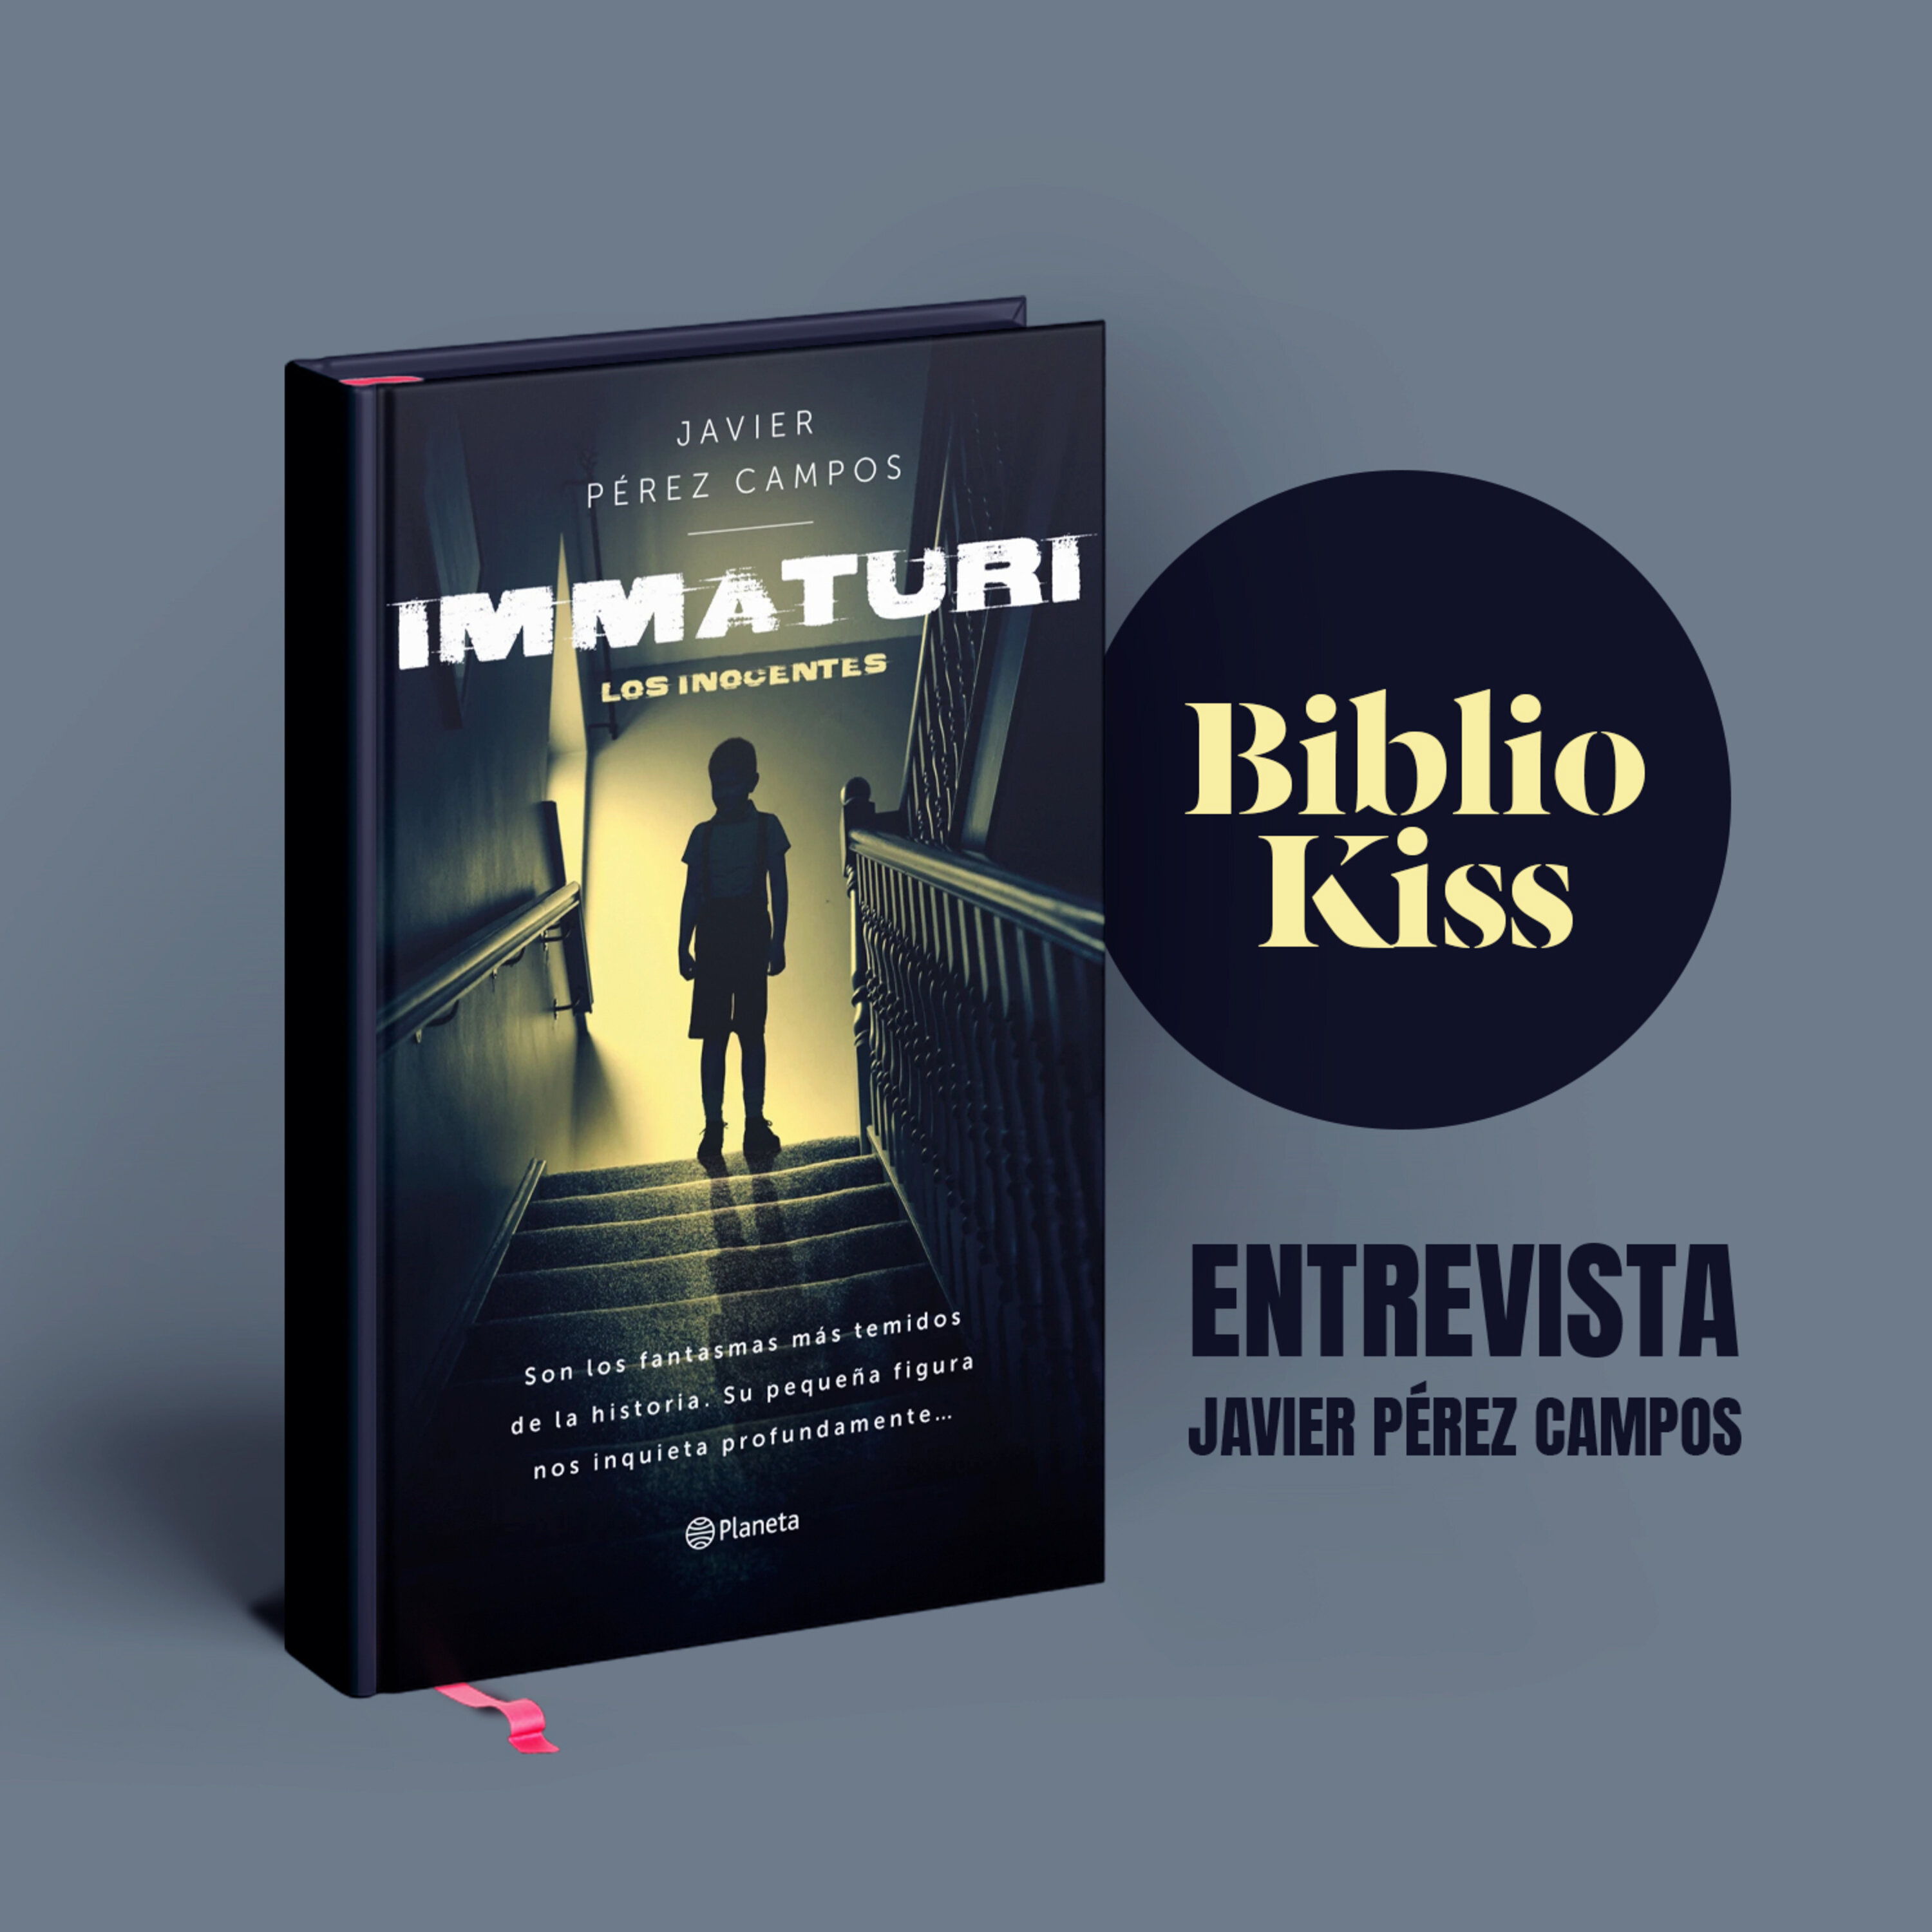 Javier Pérez Campos nos presenta "Immaturi"